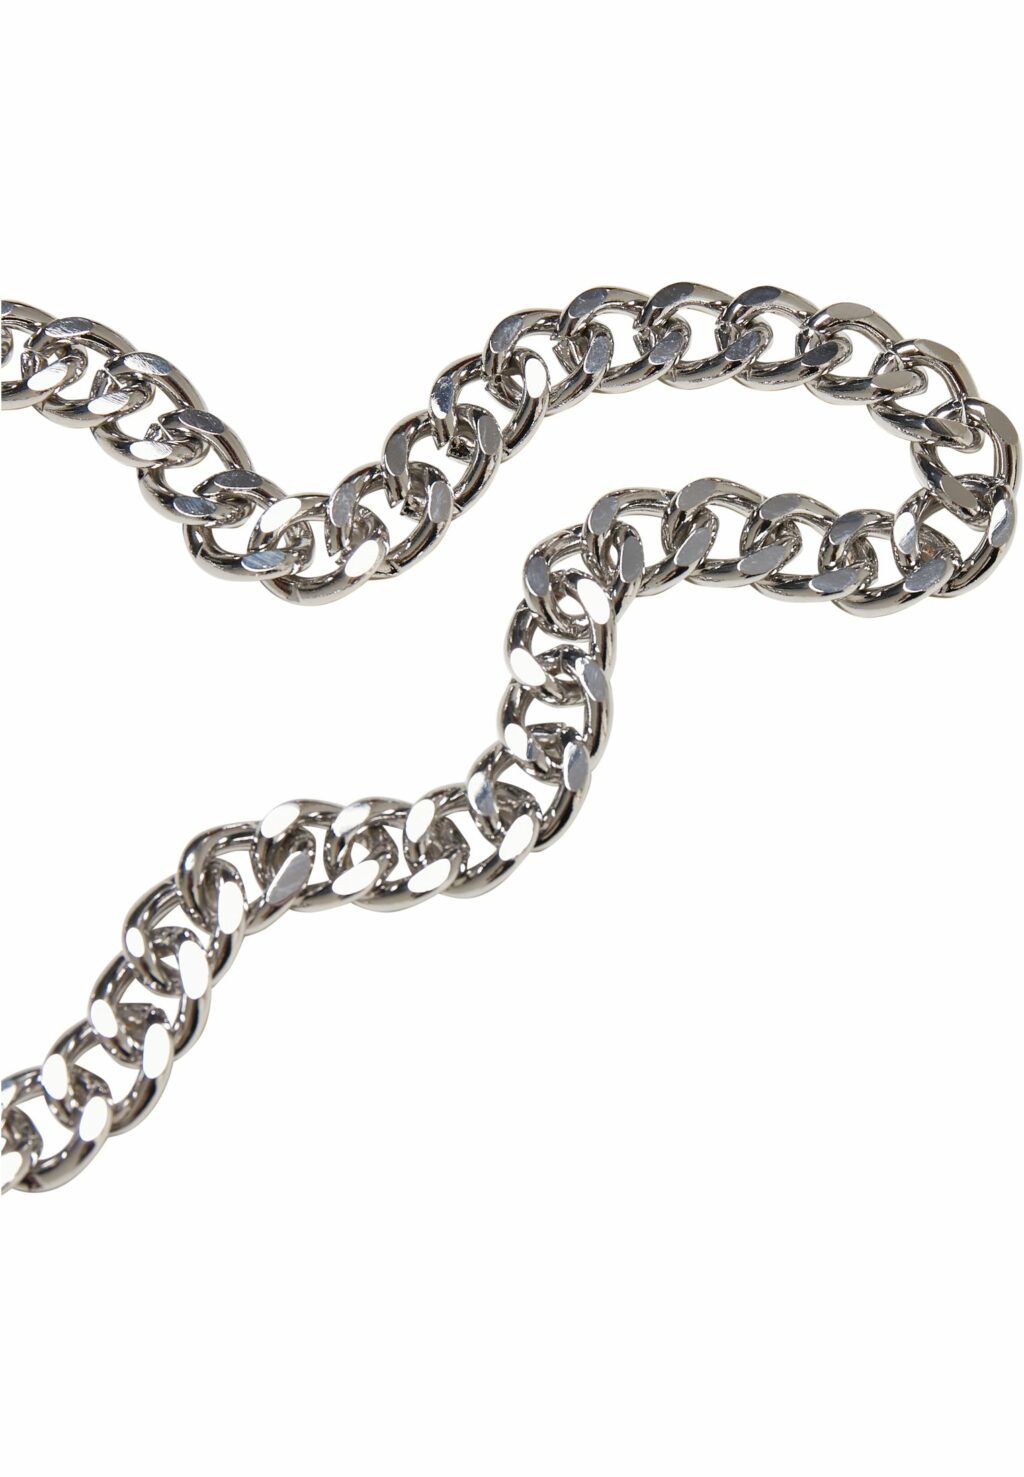 Big Saturn Basic Necklace silver one TB5215